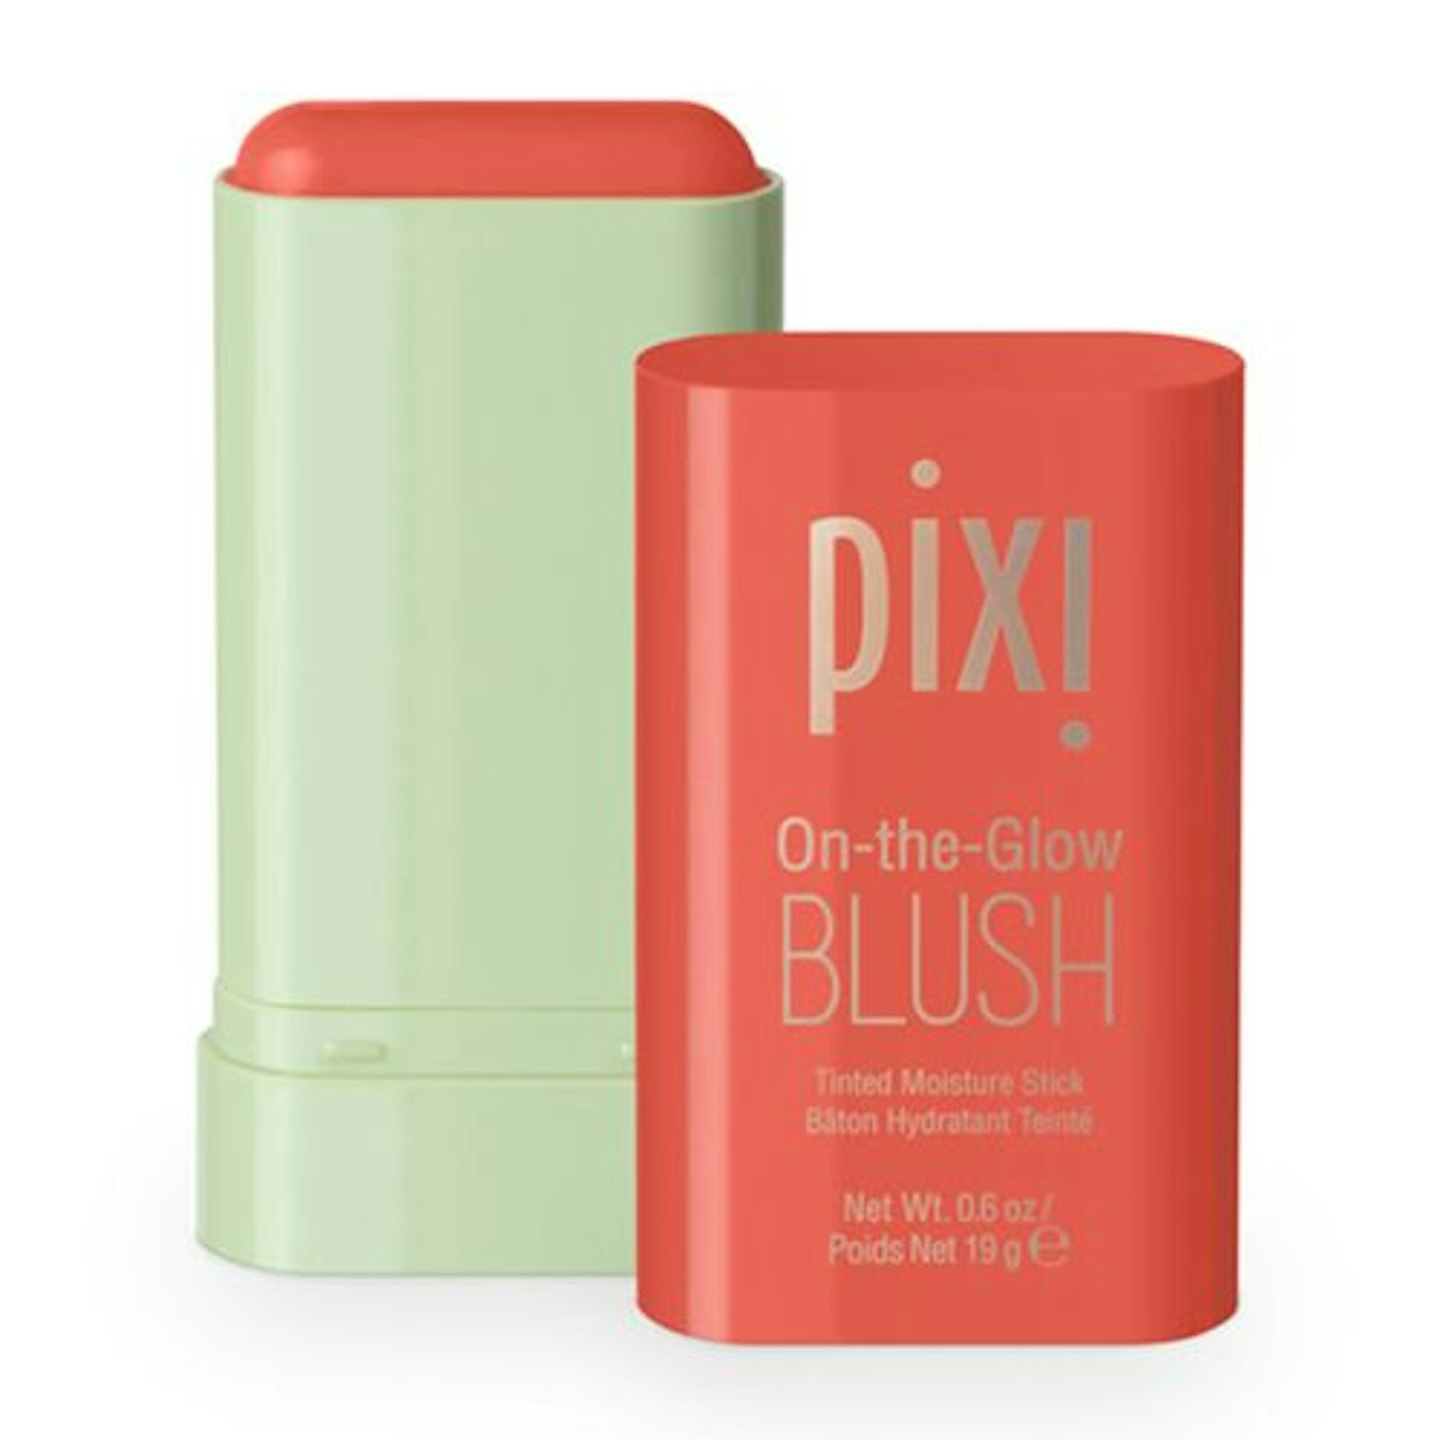 Pixi On-The-Glow Blush Cream Blush - Juicy